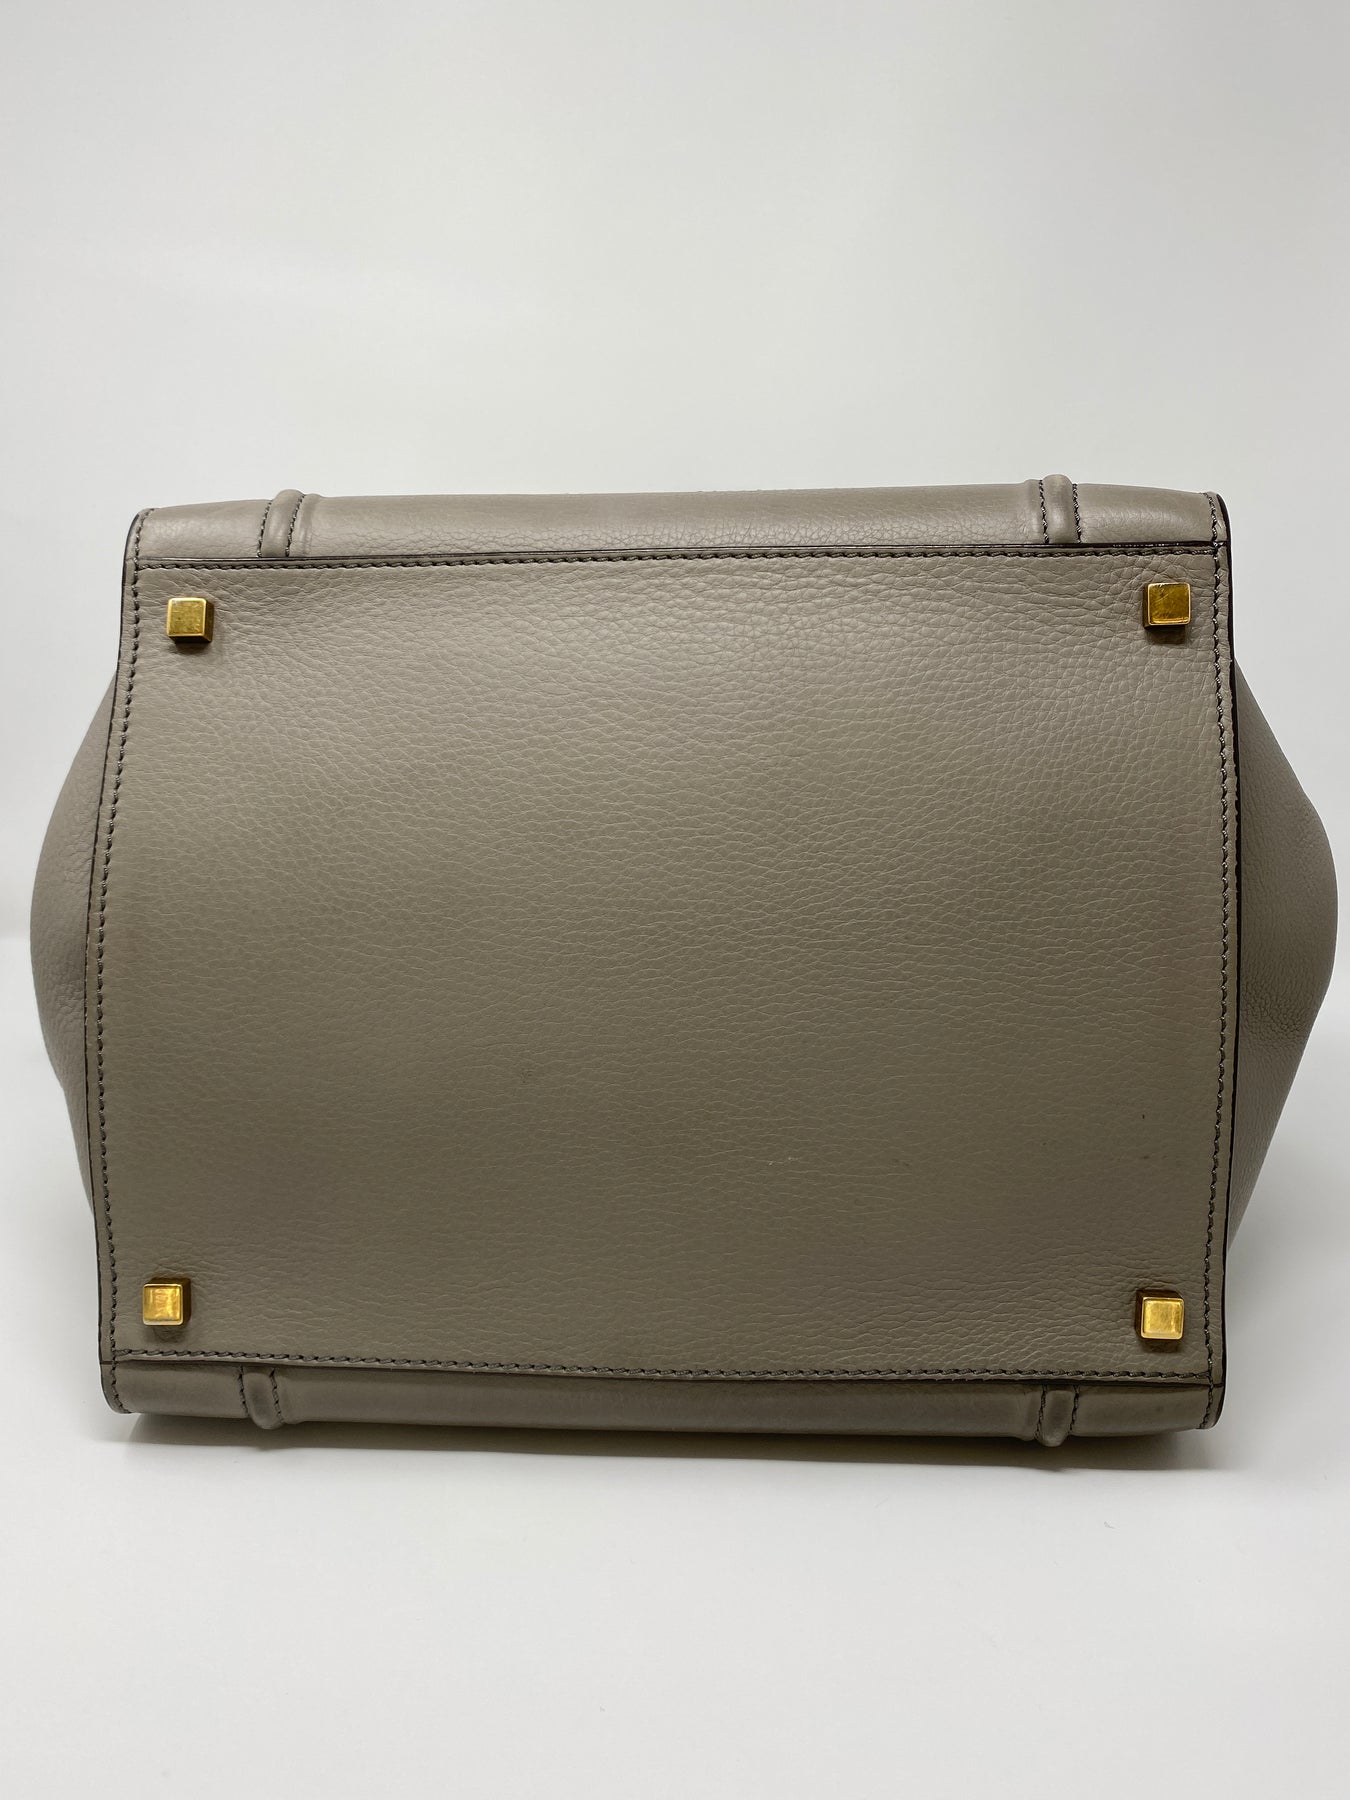 Celine - Authenticated Luggage Phantom Handbag - Suede Grey Plain for Women, Very Good Condition